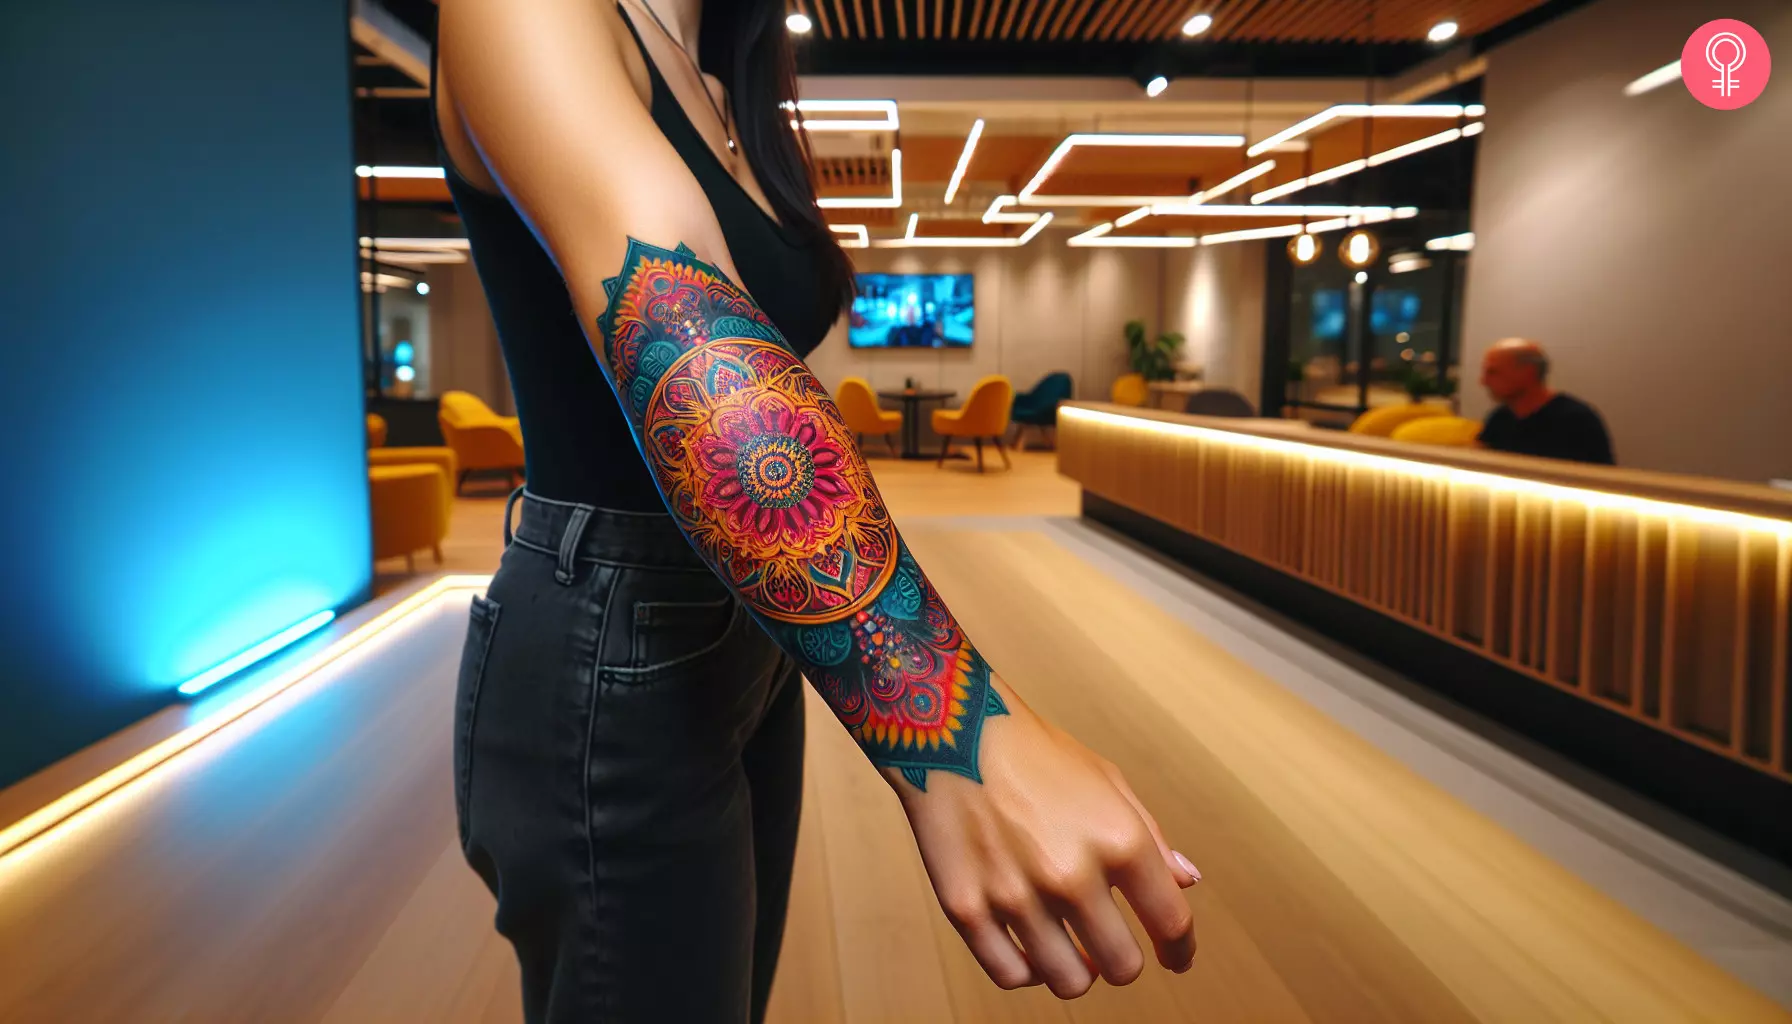 Mandala tattoo design on the forearm of a woman